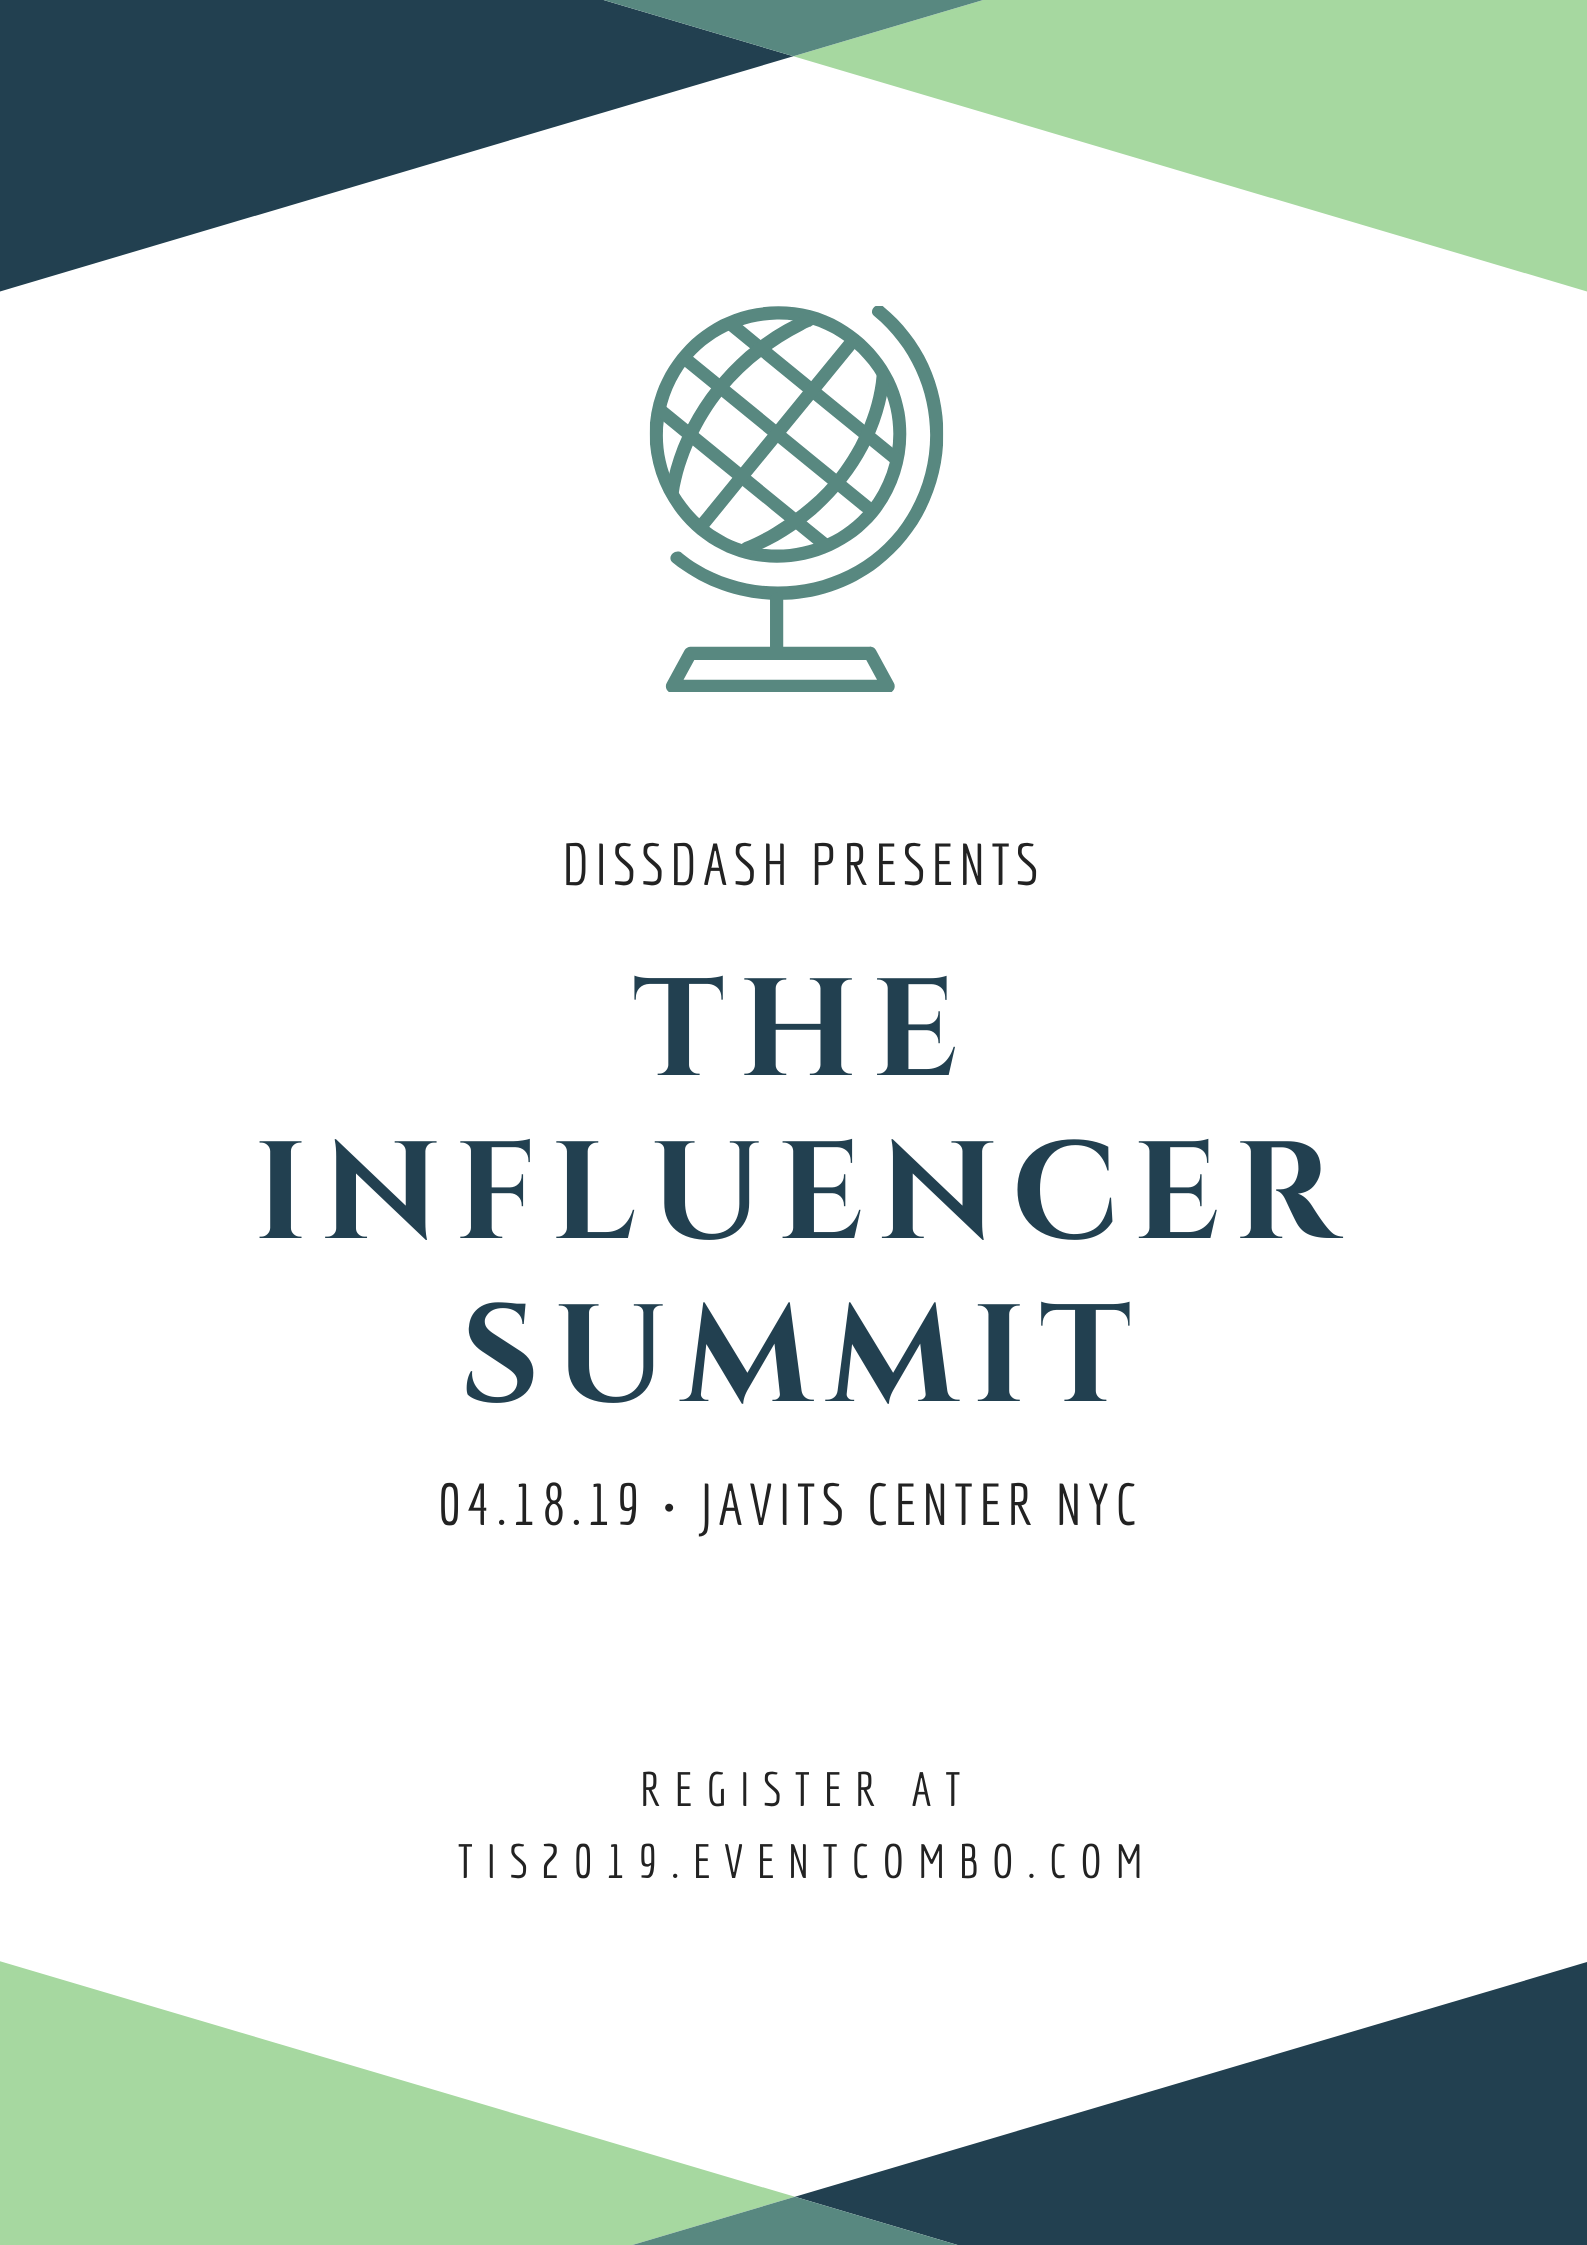 The Digital Influencer Summit